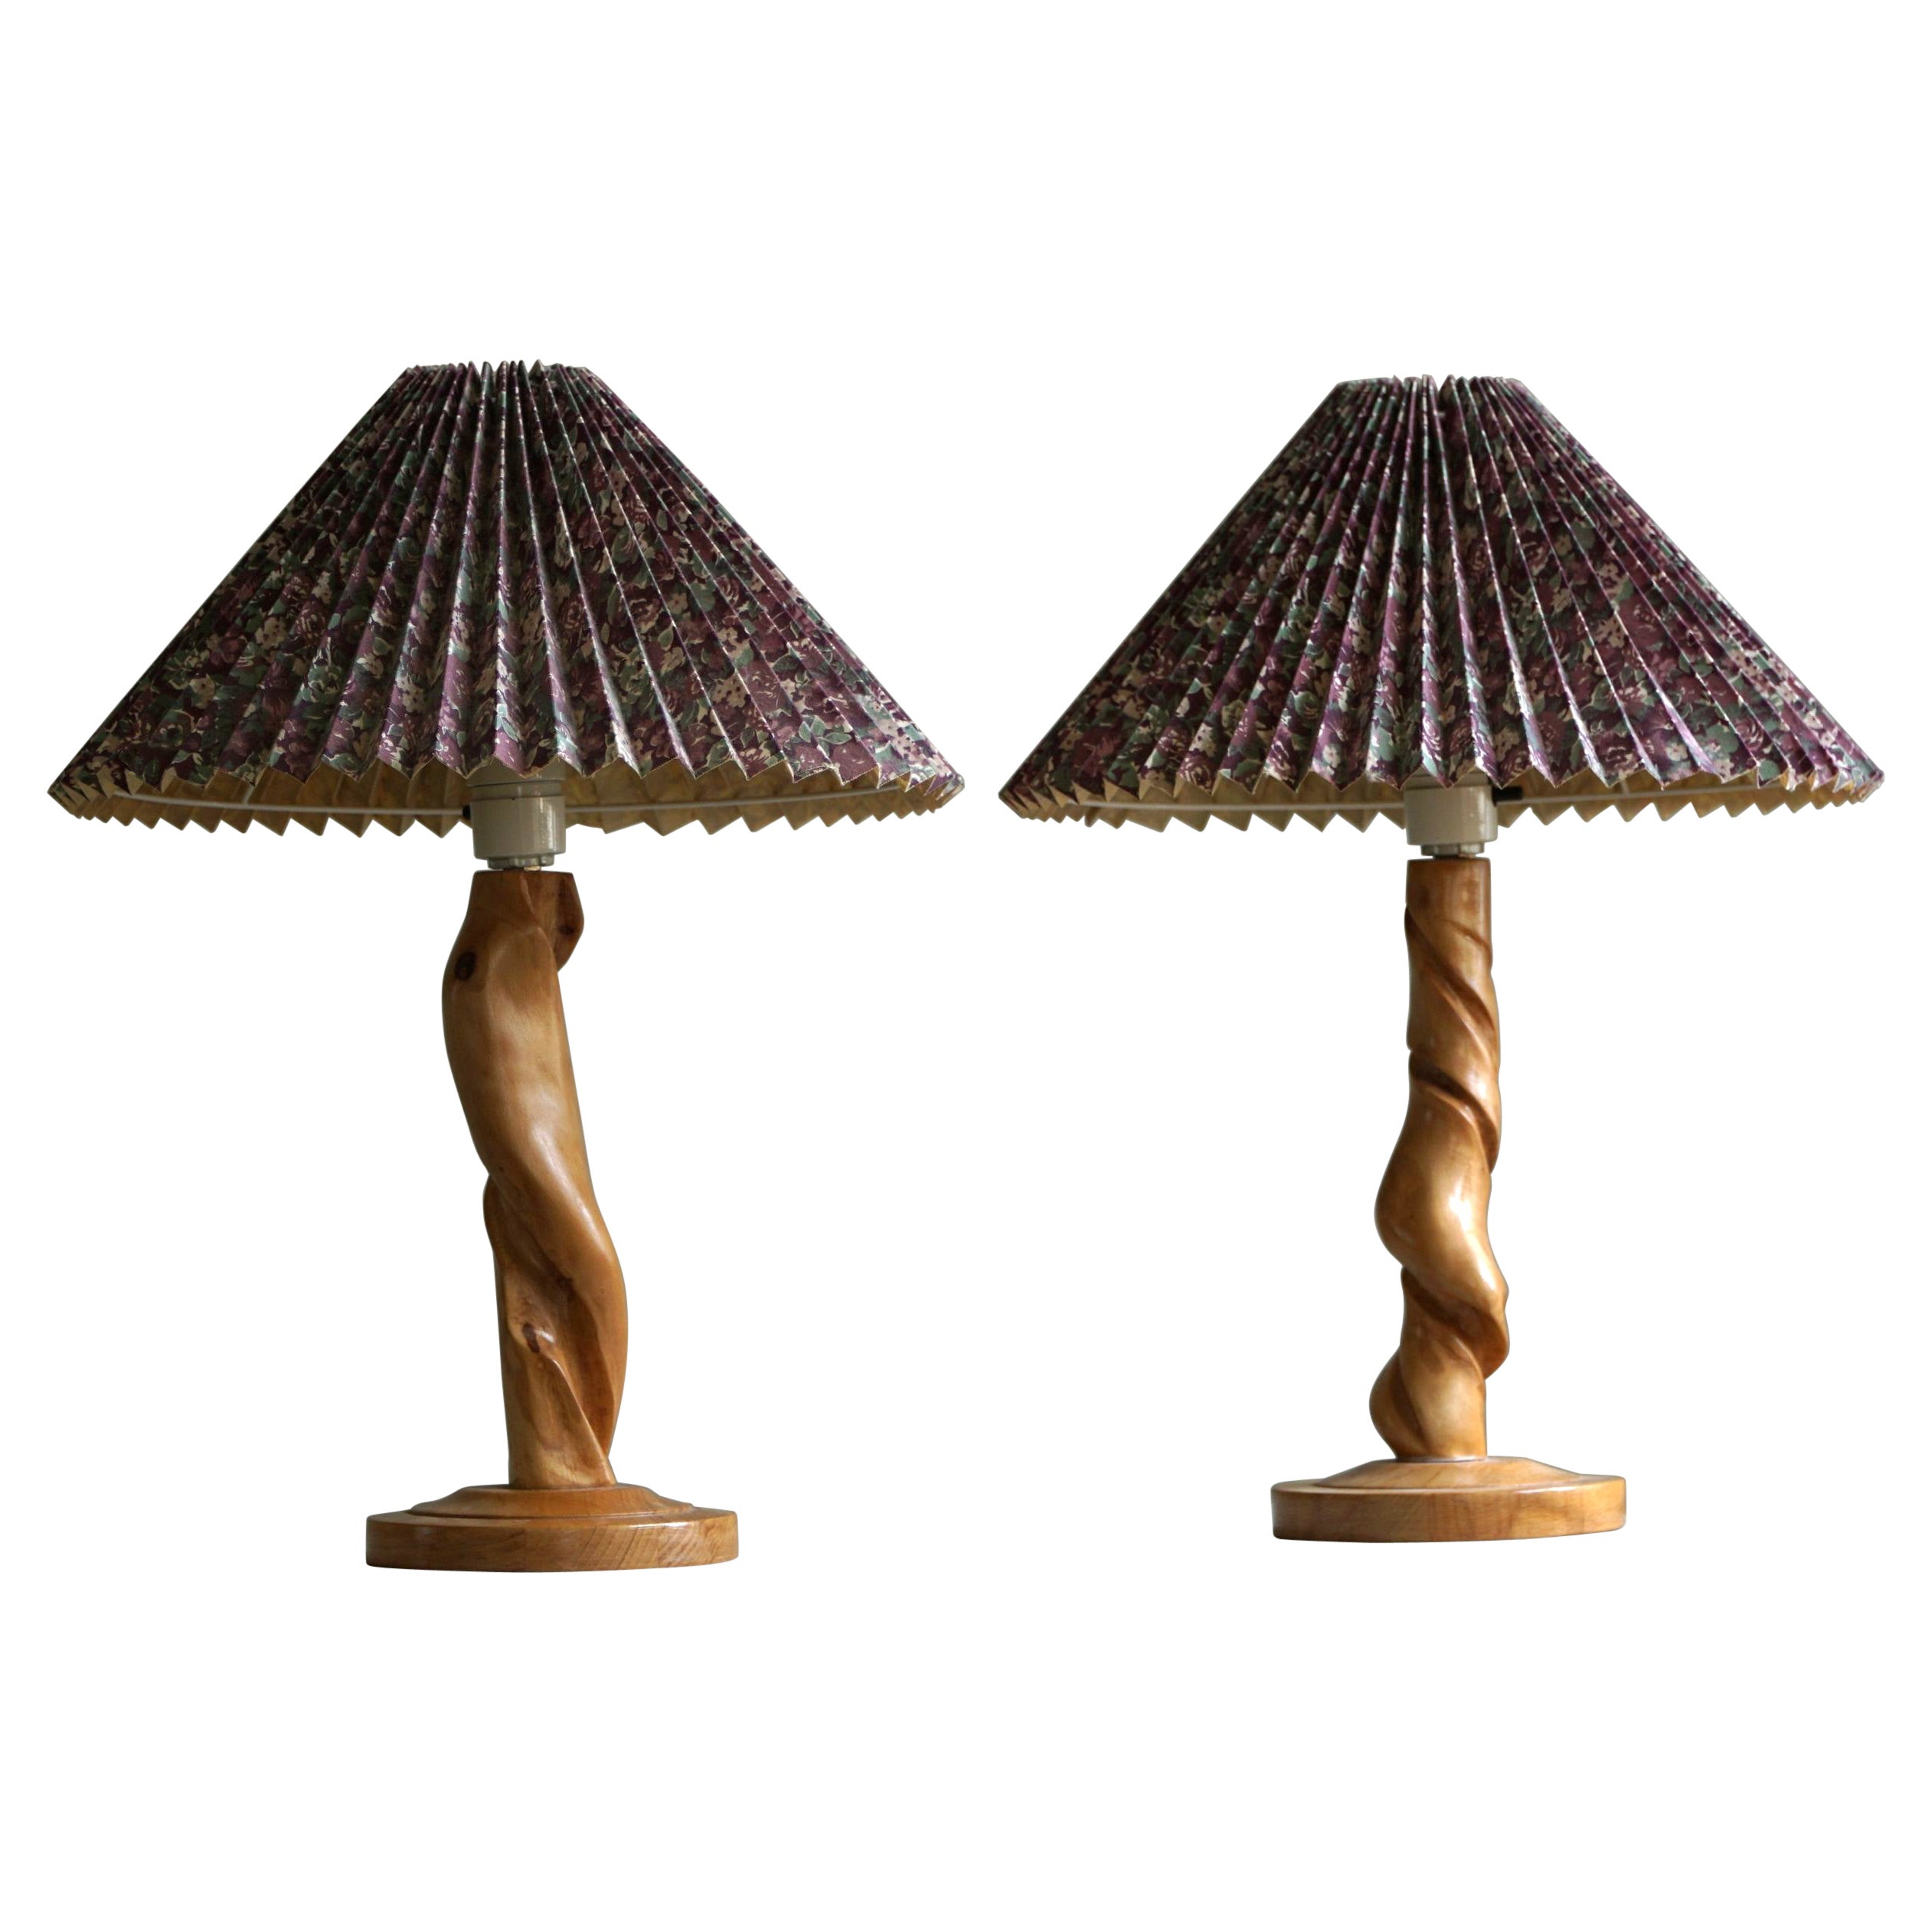 Pair of Sculptural Organic Wooden Table Lamps, Scandinavian Modern, 1970s For Sale